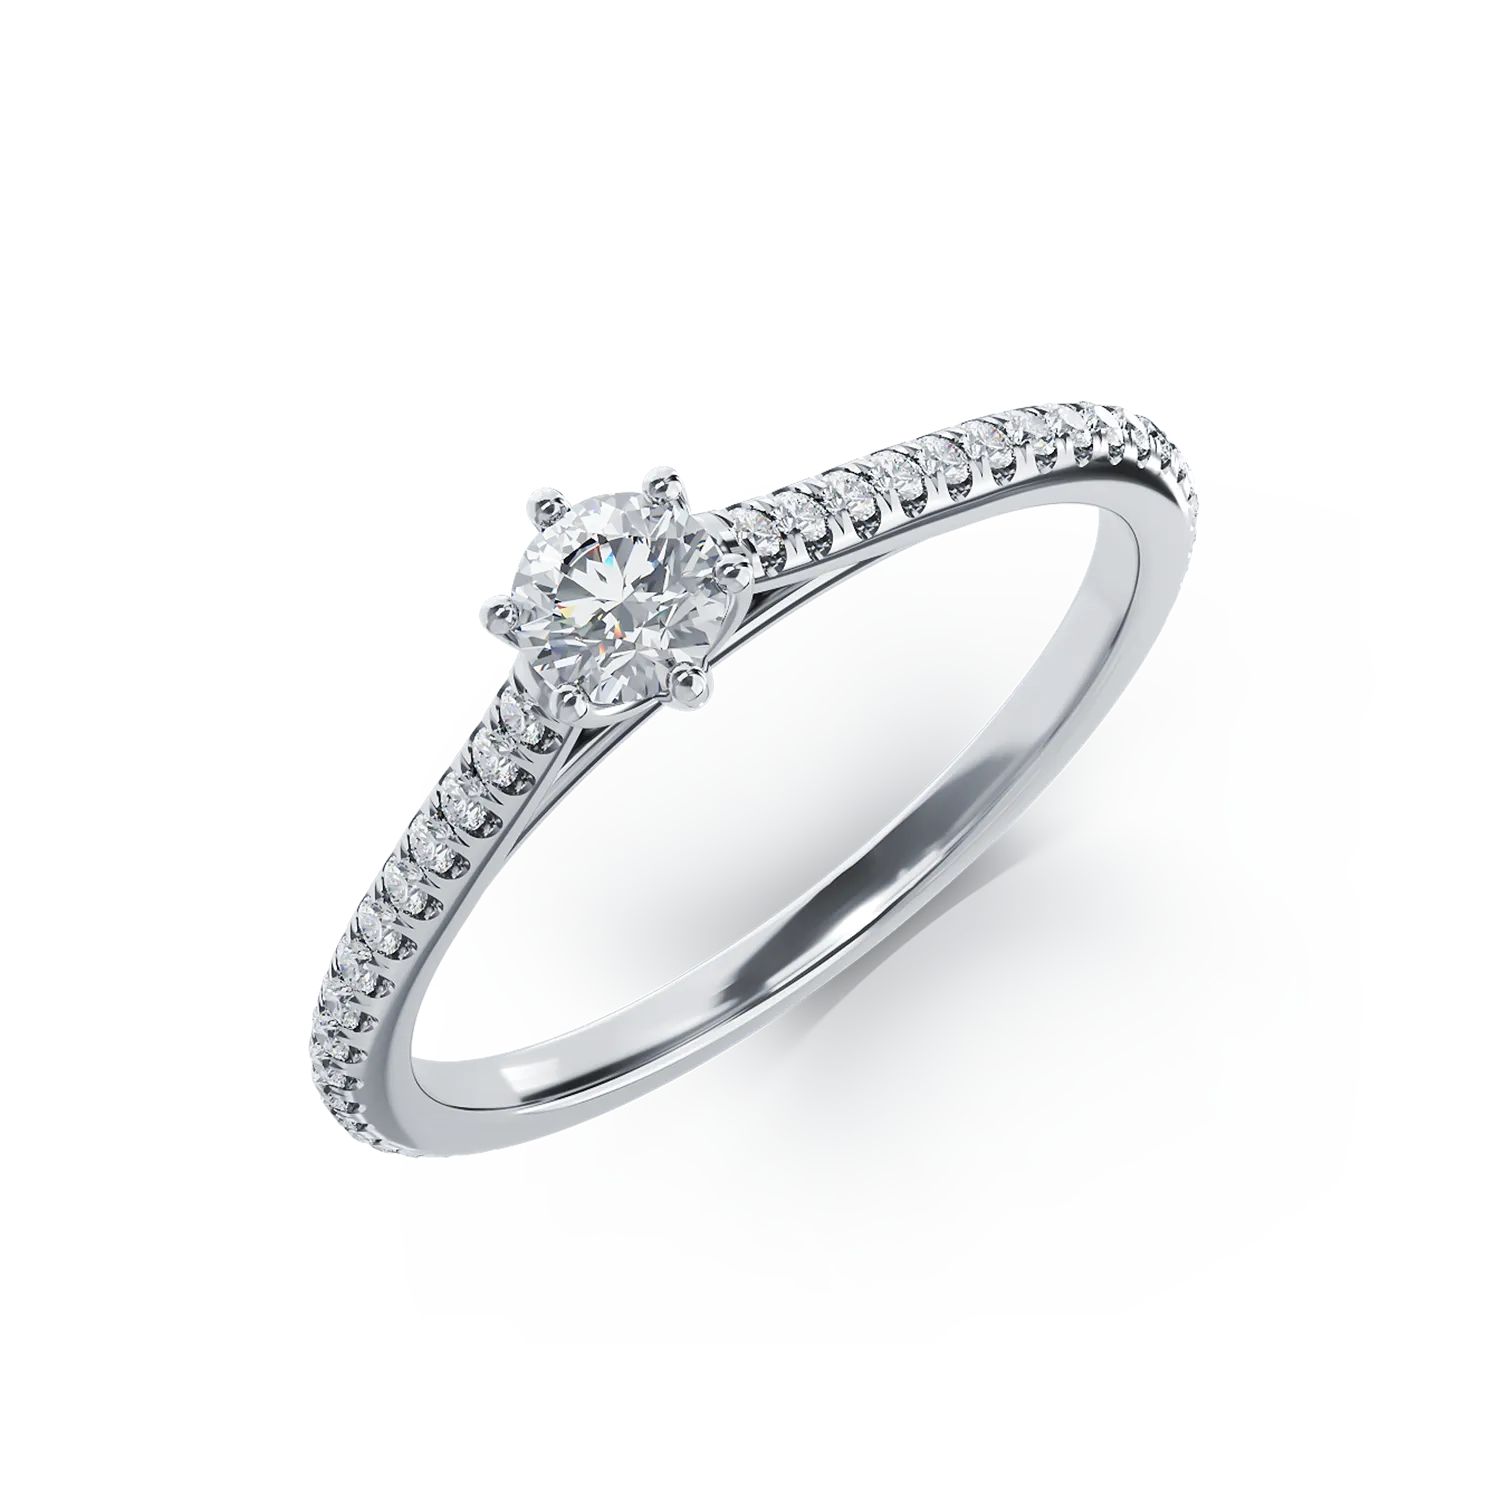 Platinum engagement ring with 0.245ct diamond and 0.19ct diamonds